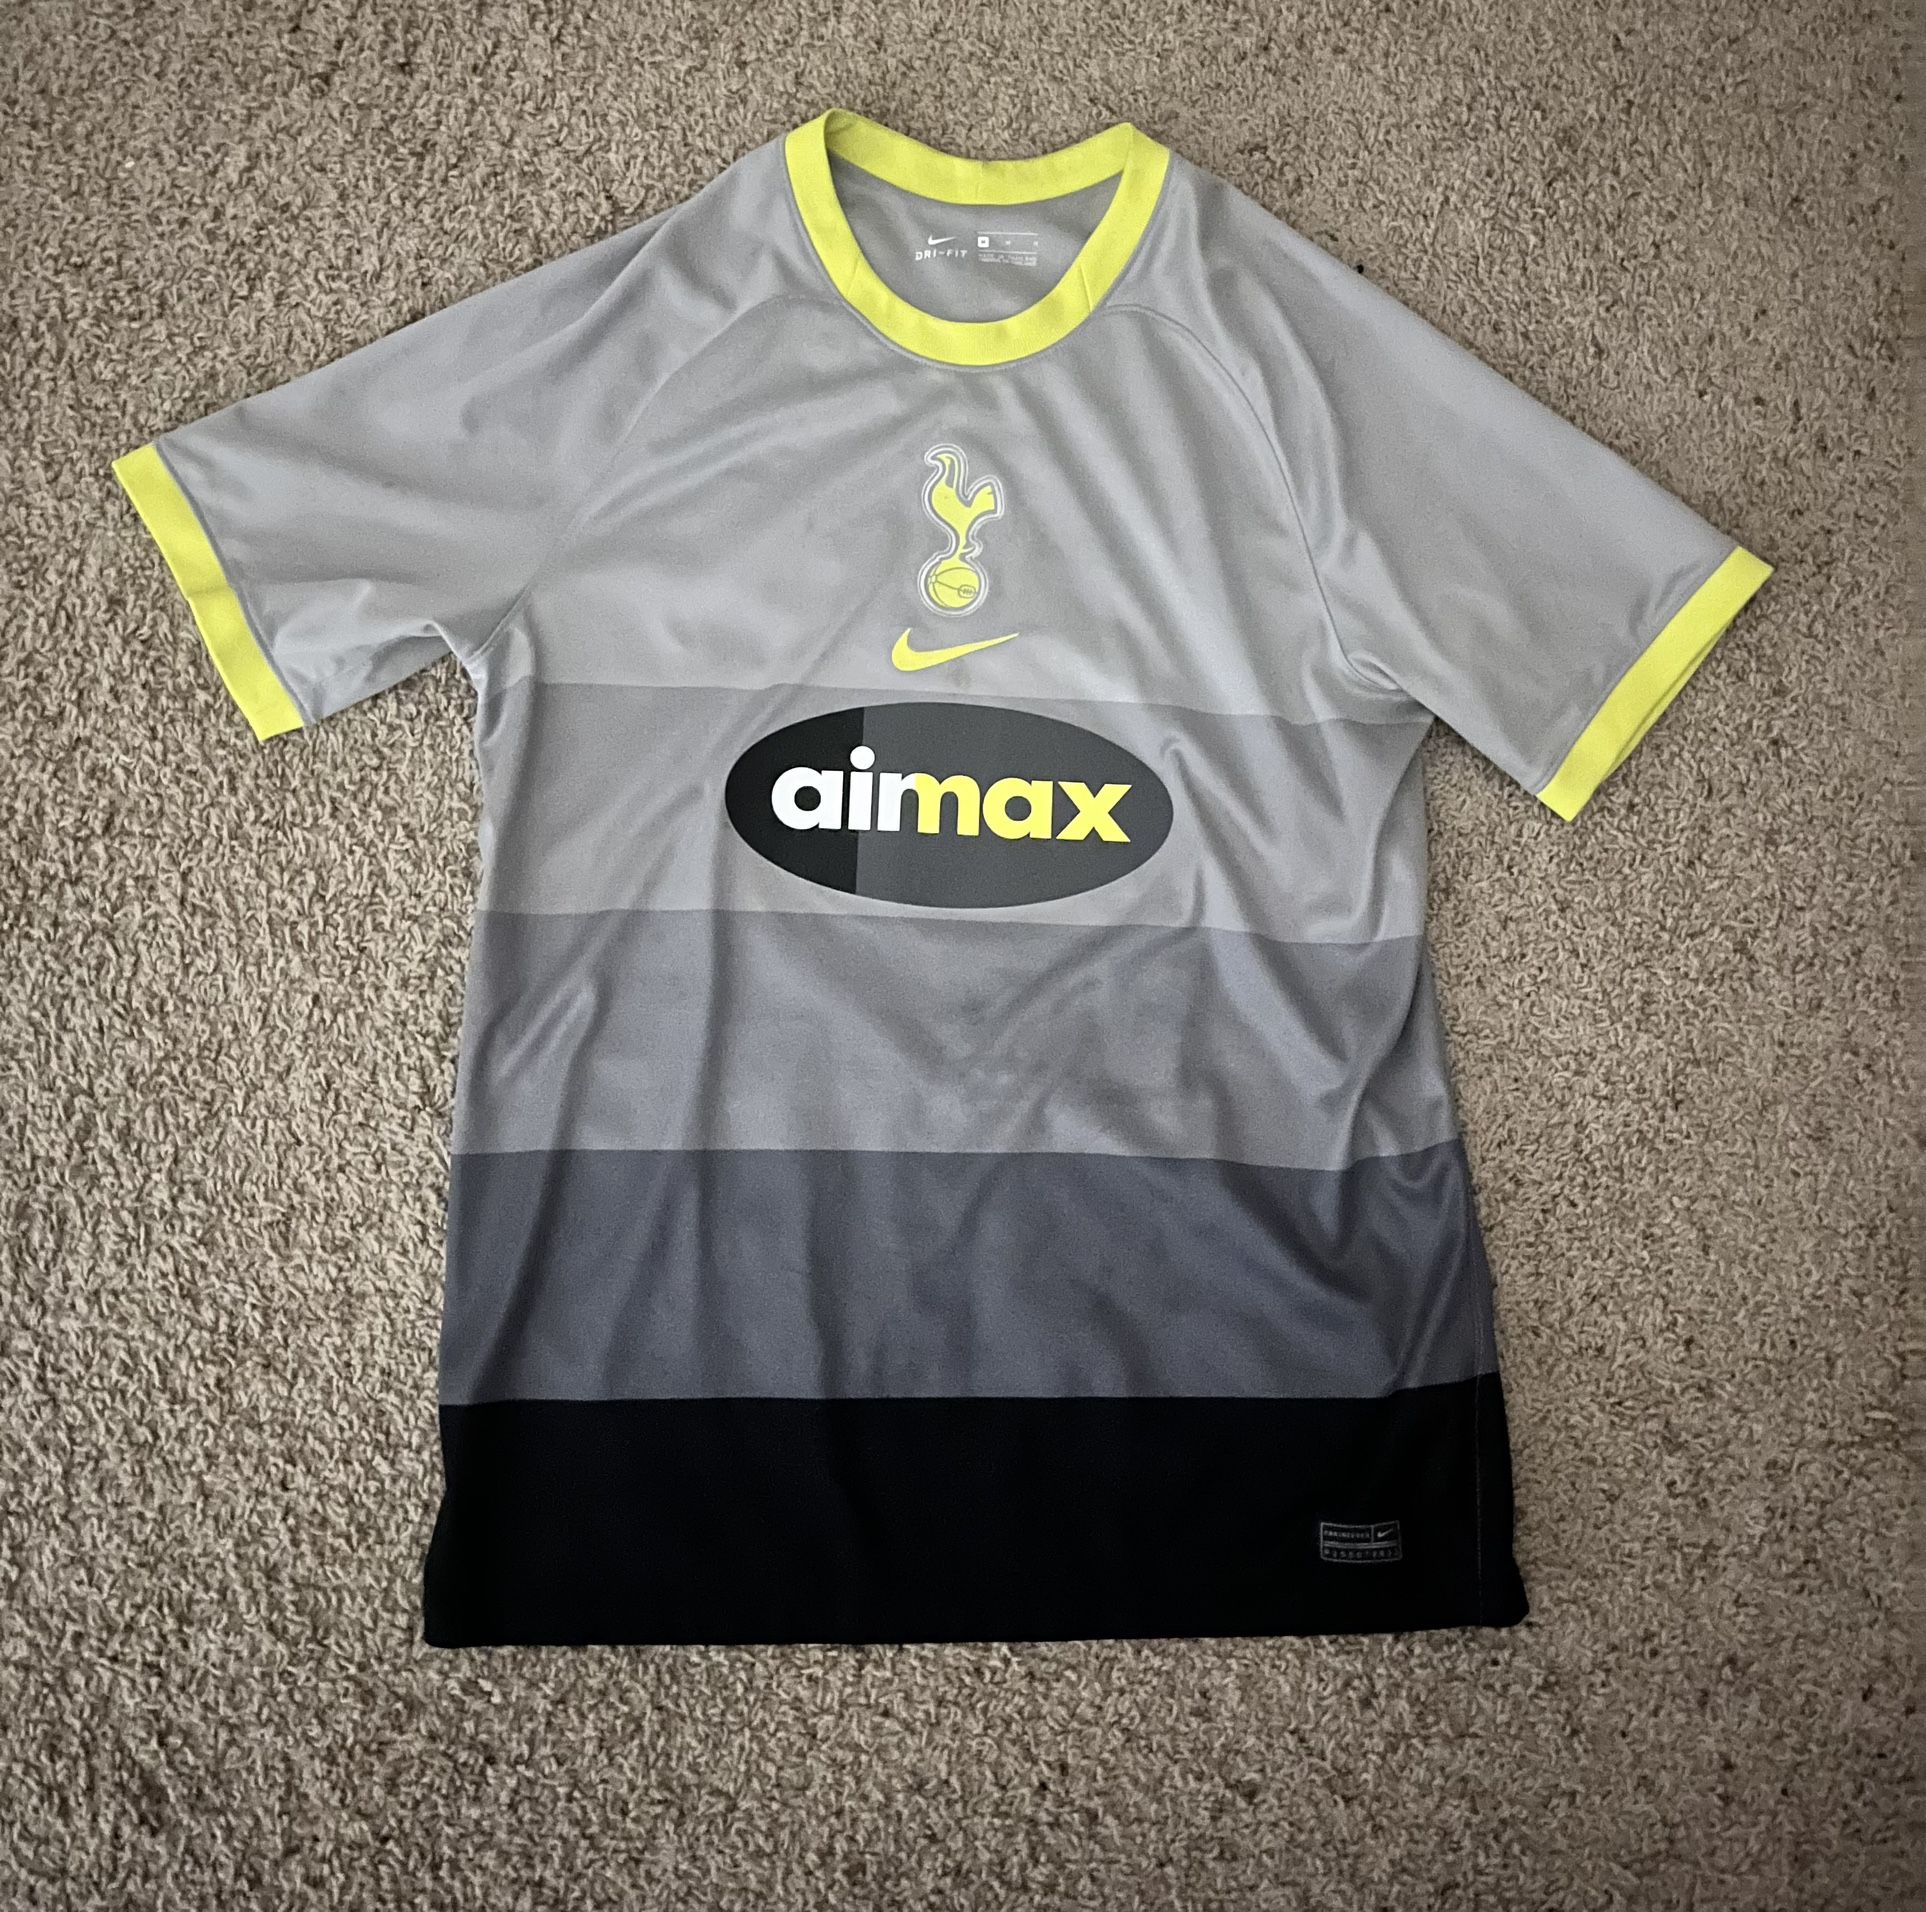 2021 limited Tottenham airmax jersey 